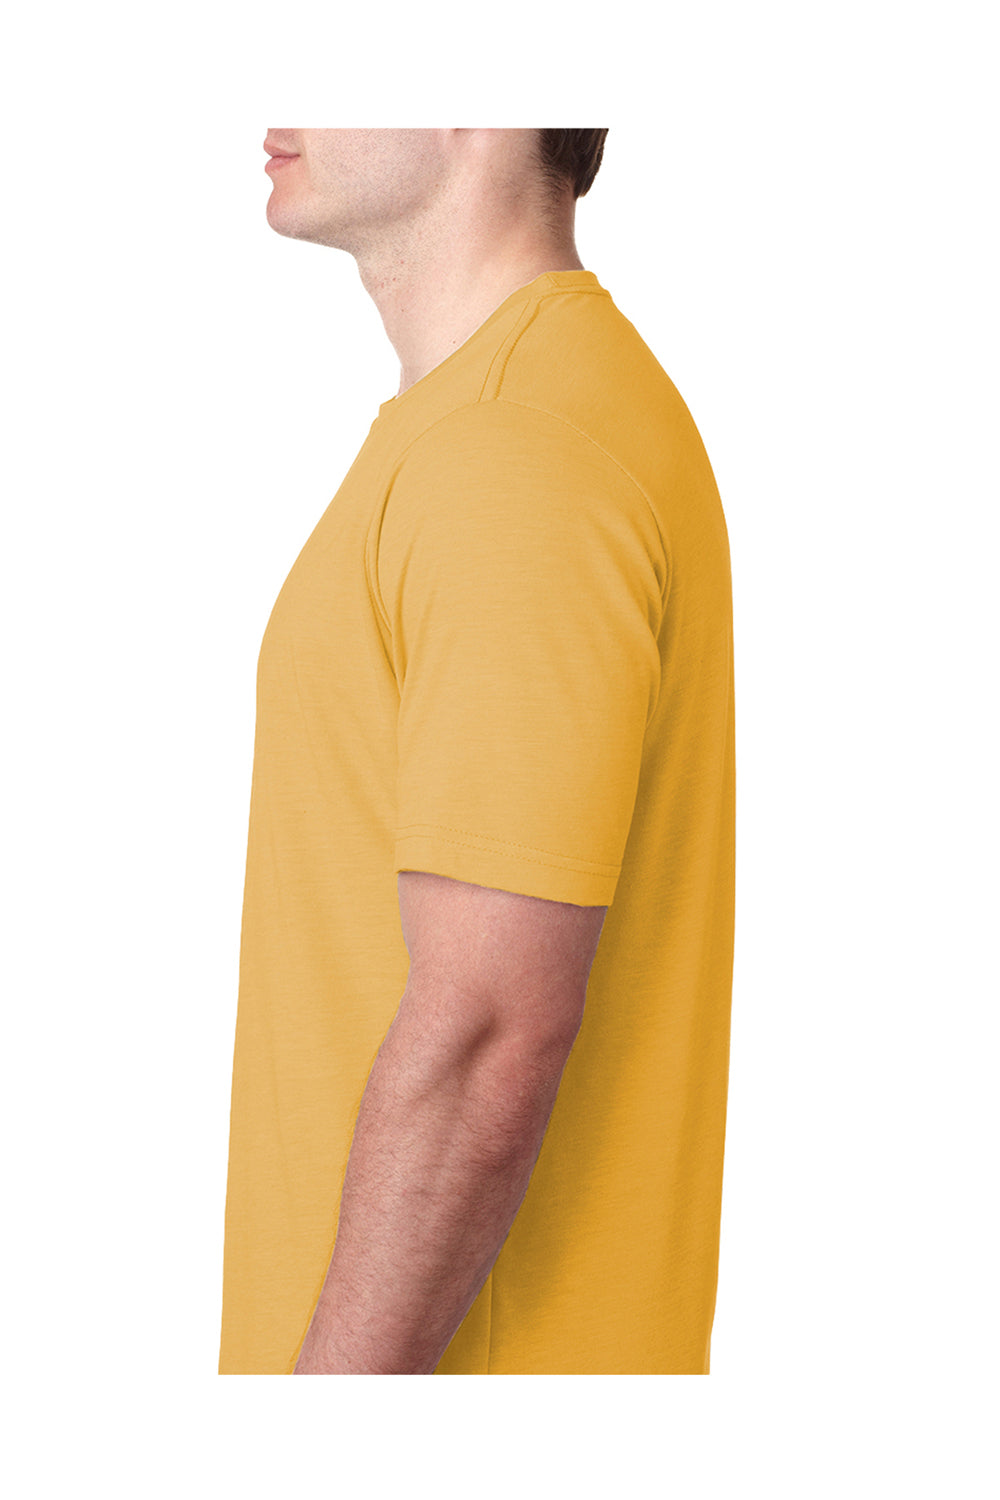 Next Level 6200 Mens Jersey Short Sleeve Crewneck T-Shirt Antique Gold Side